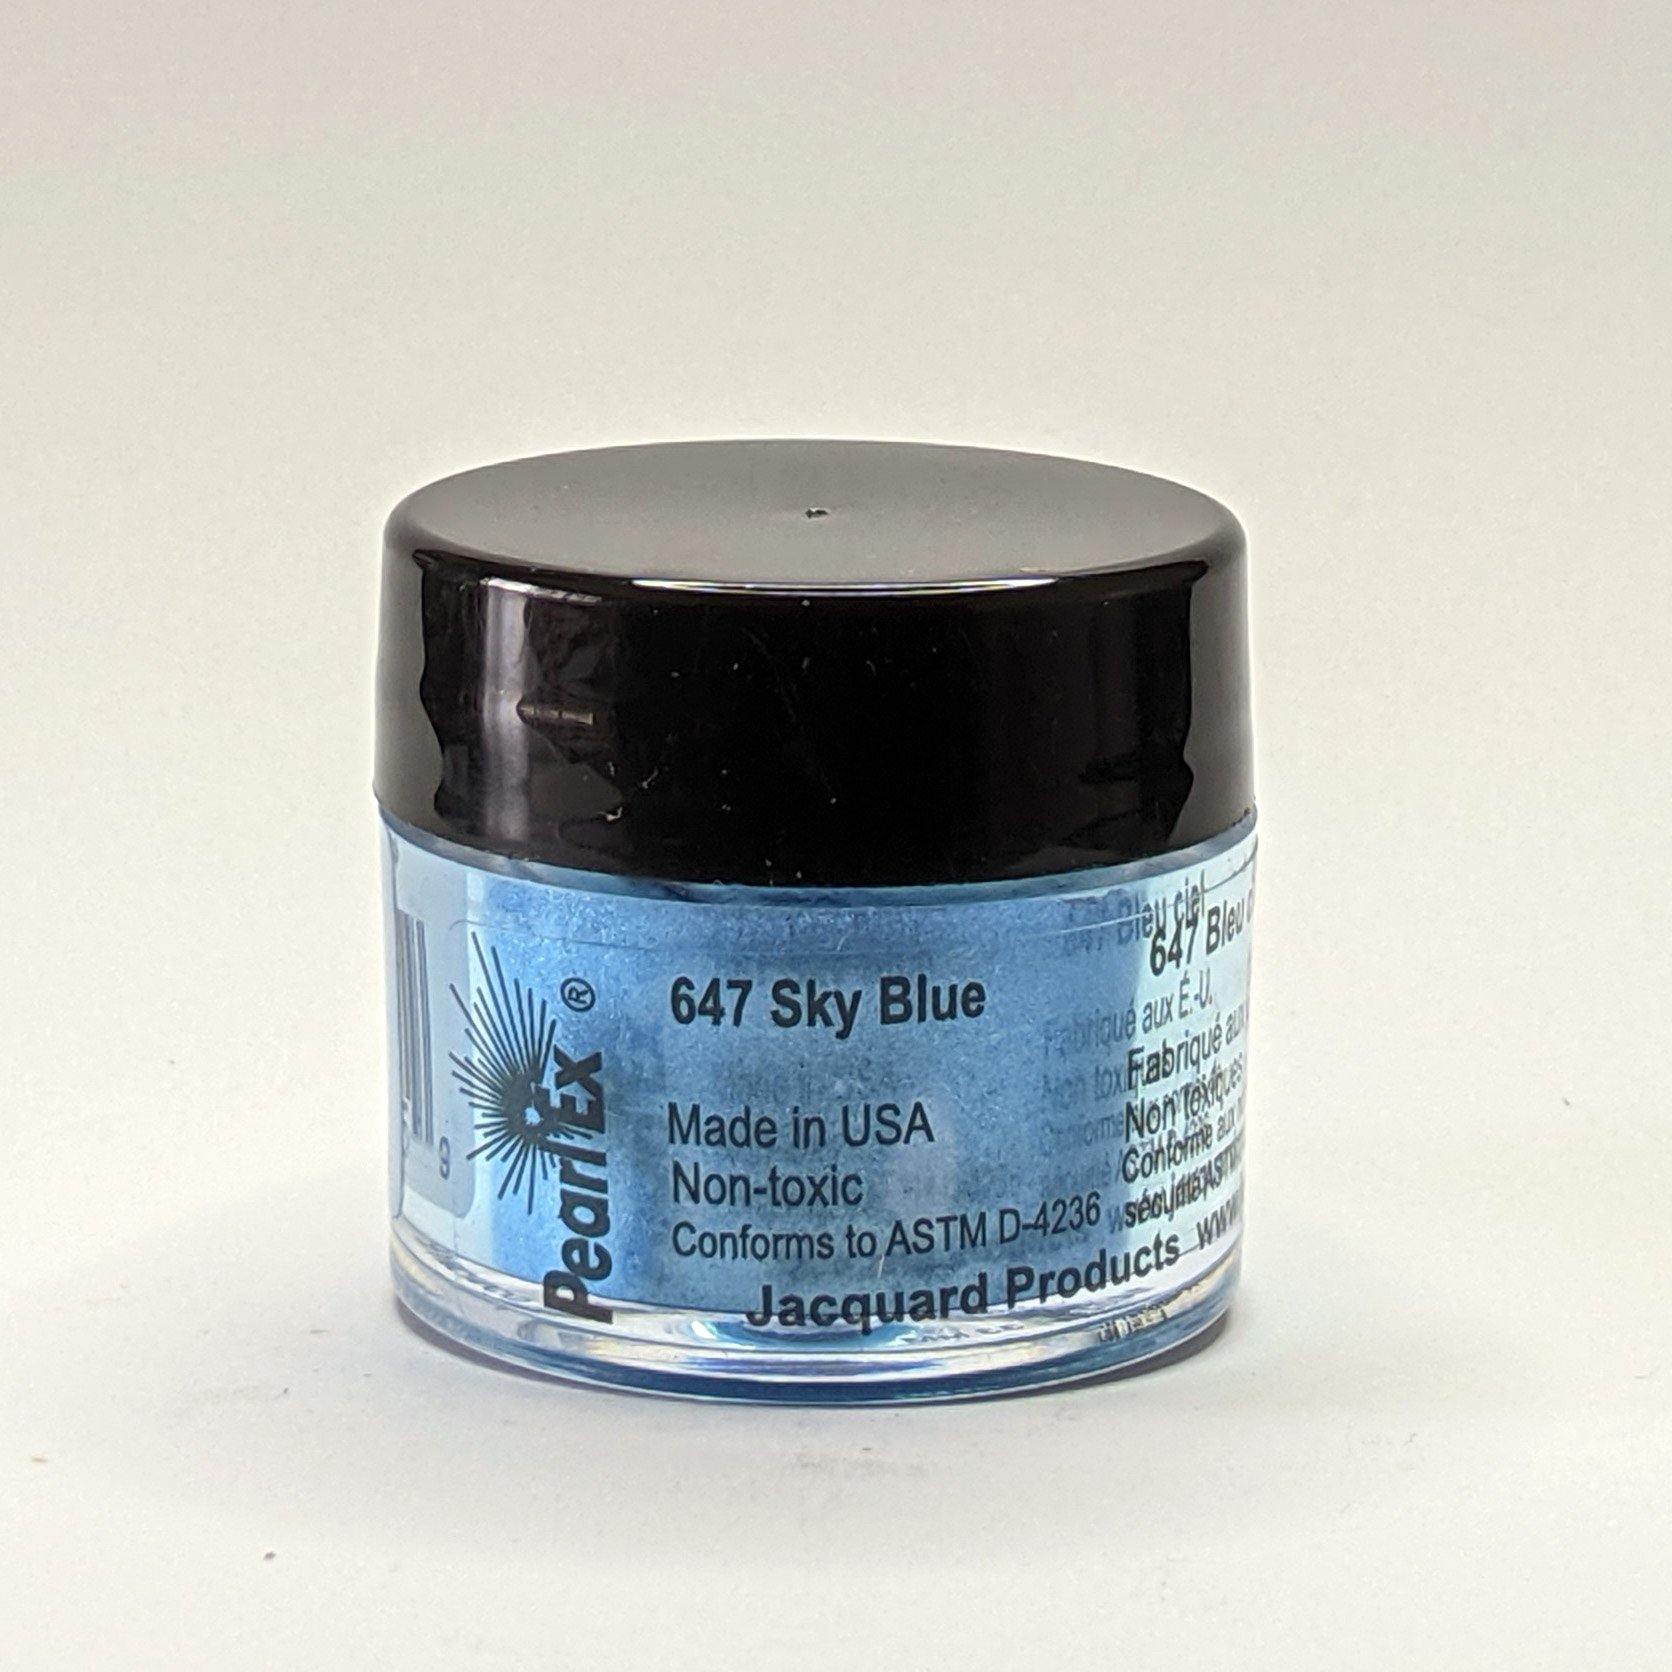 Sky Blue Pearl Ex Pigment 3g - Poethan